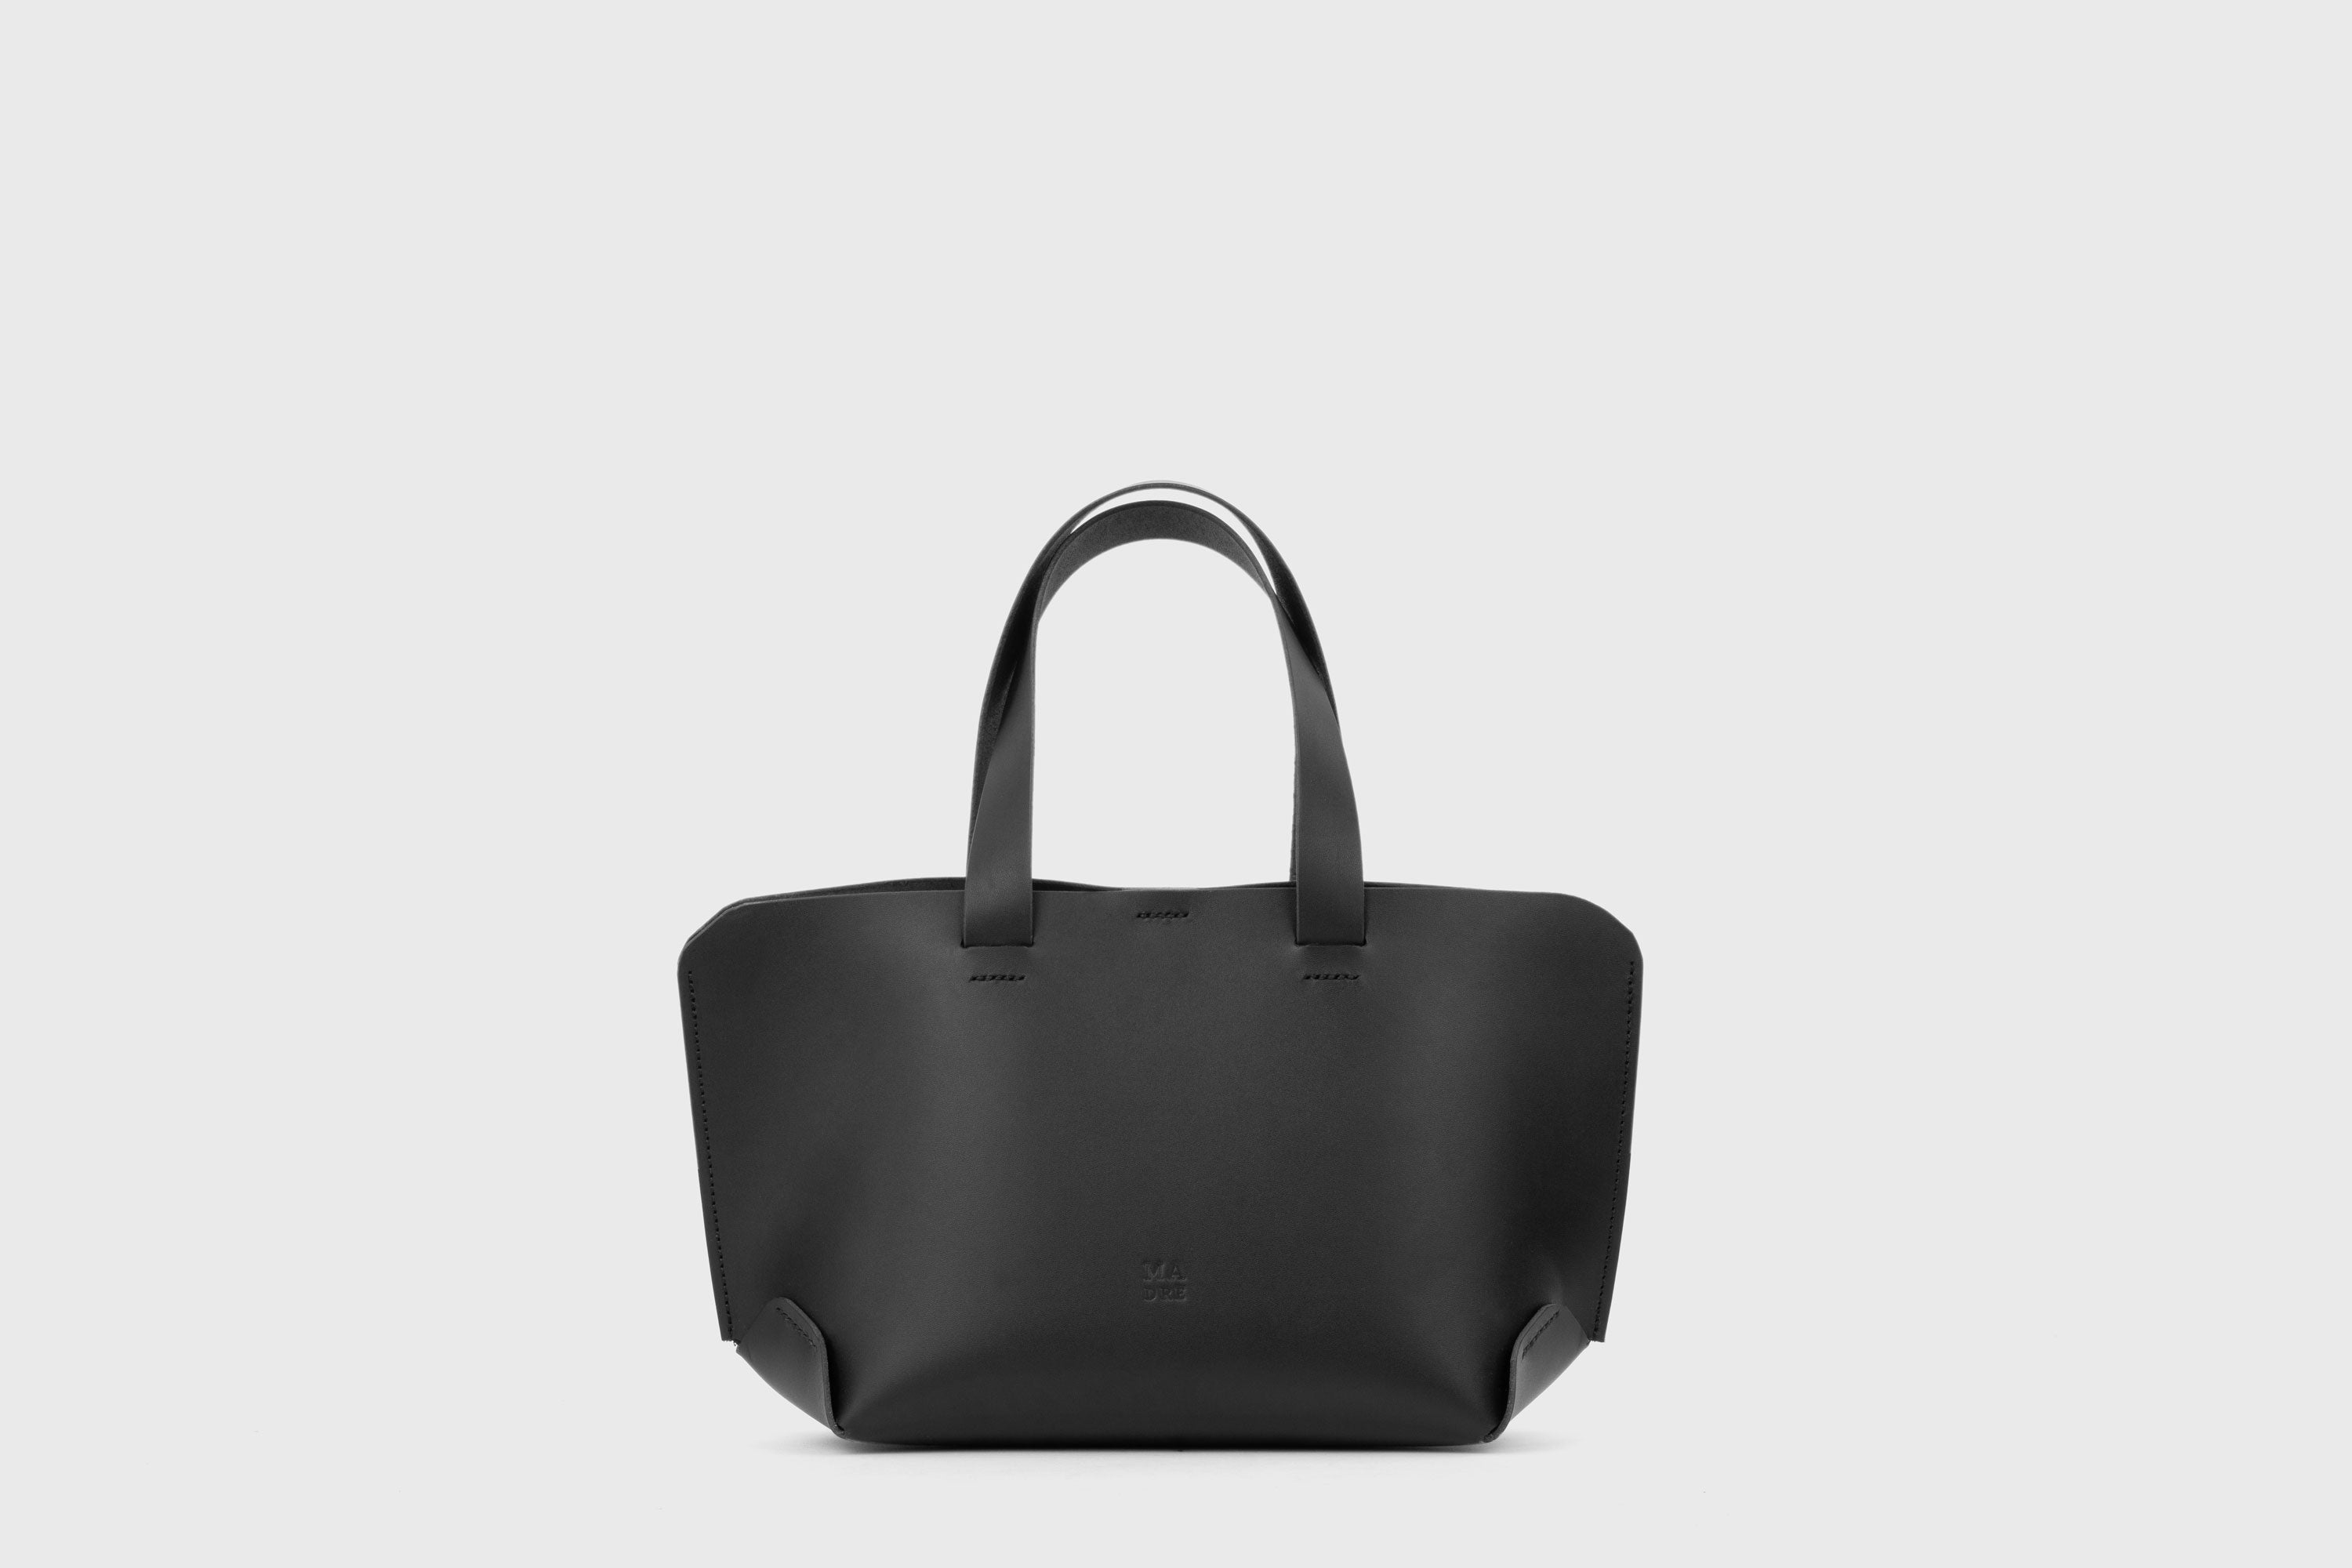 Medium Tote Bag Black Color Leather Premium Quality Minimalist Modern Design Atelier Madre Manuel Dreesmann Barcelona Spain